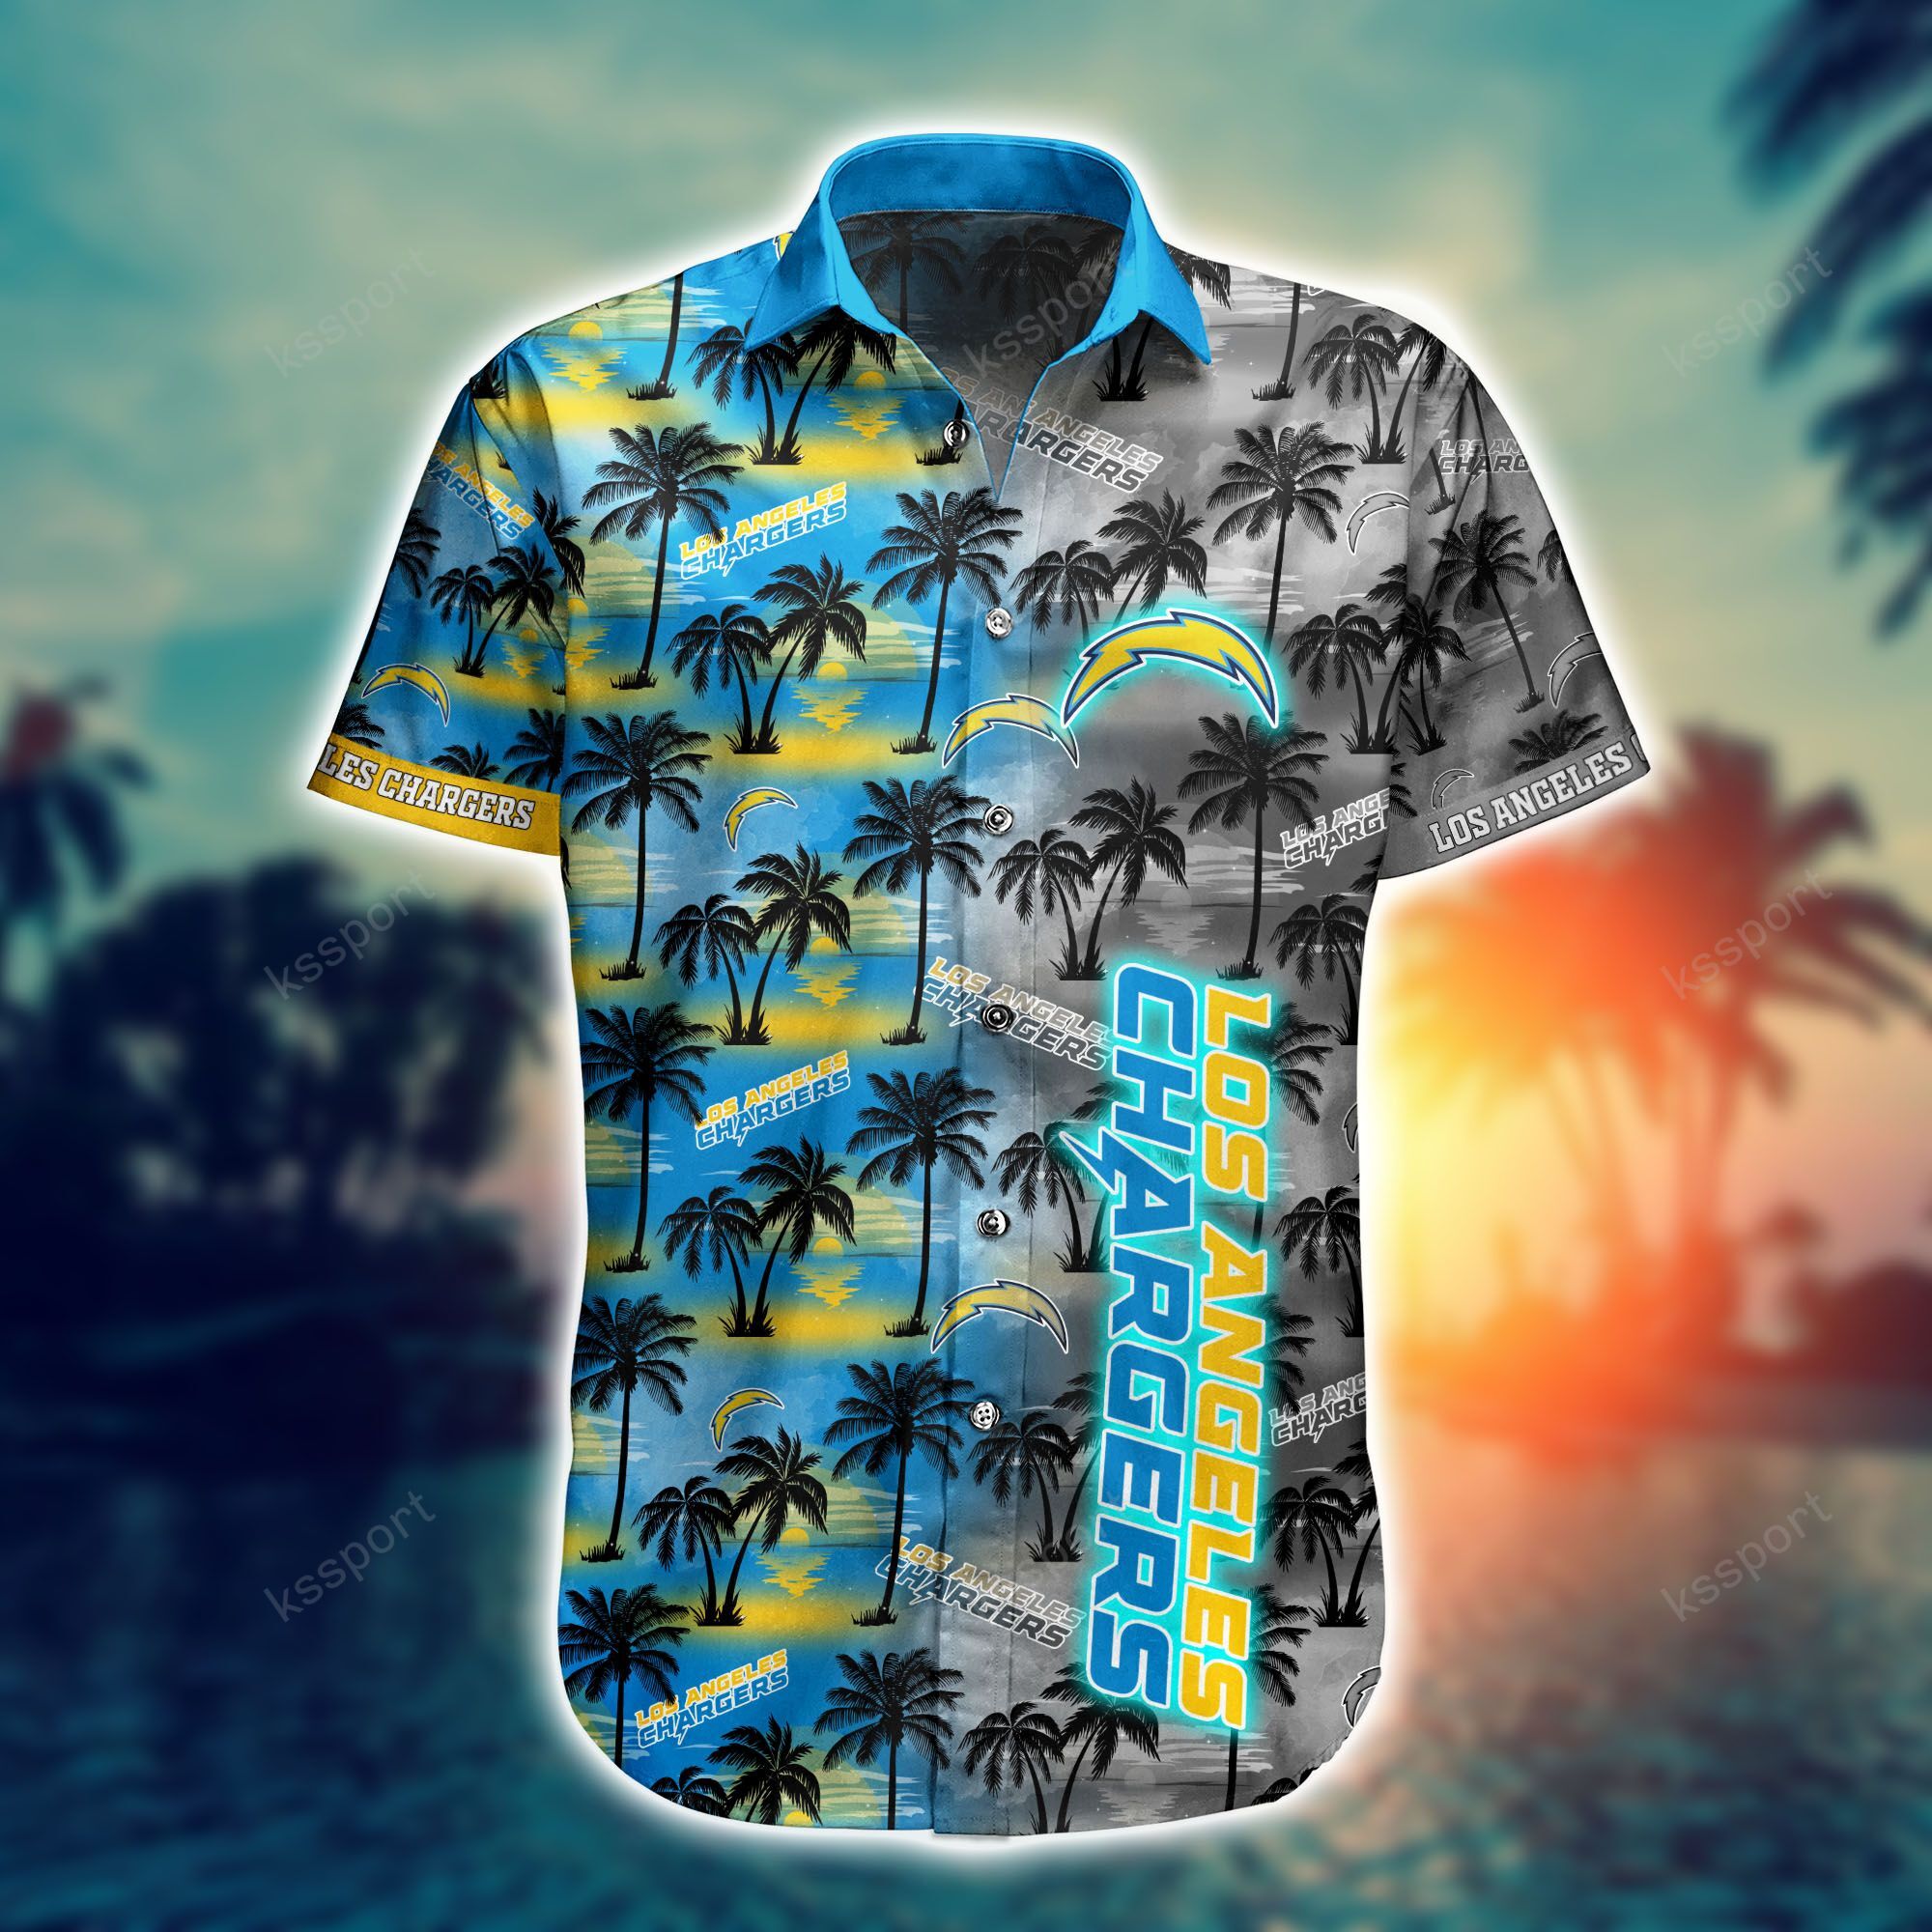 Hawaiian shirt and shorts is a great way to look stylish at a beach party 32